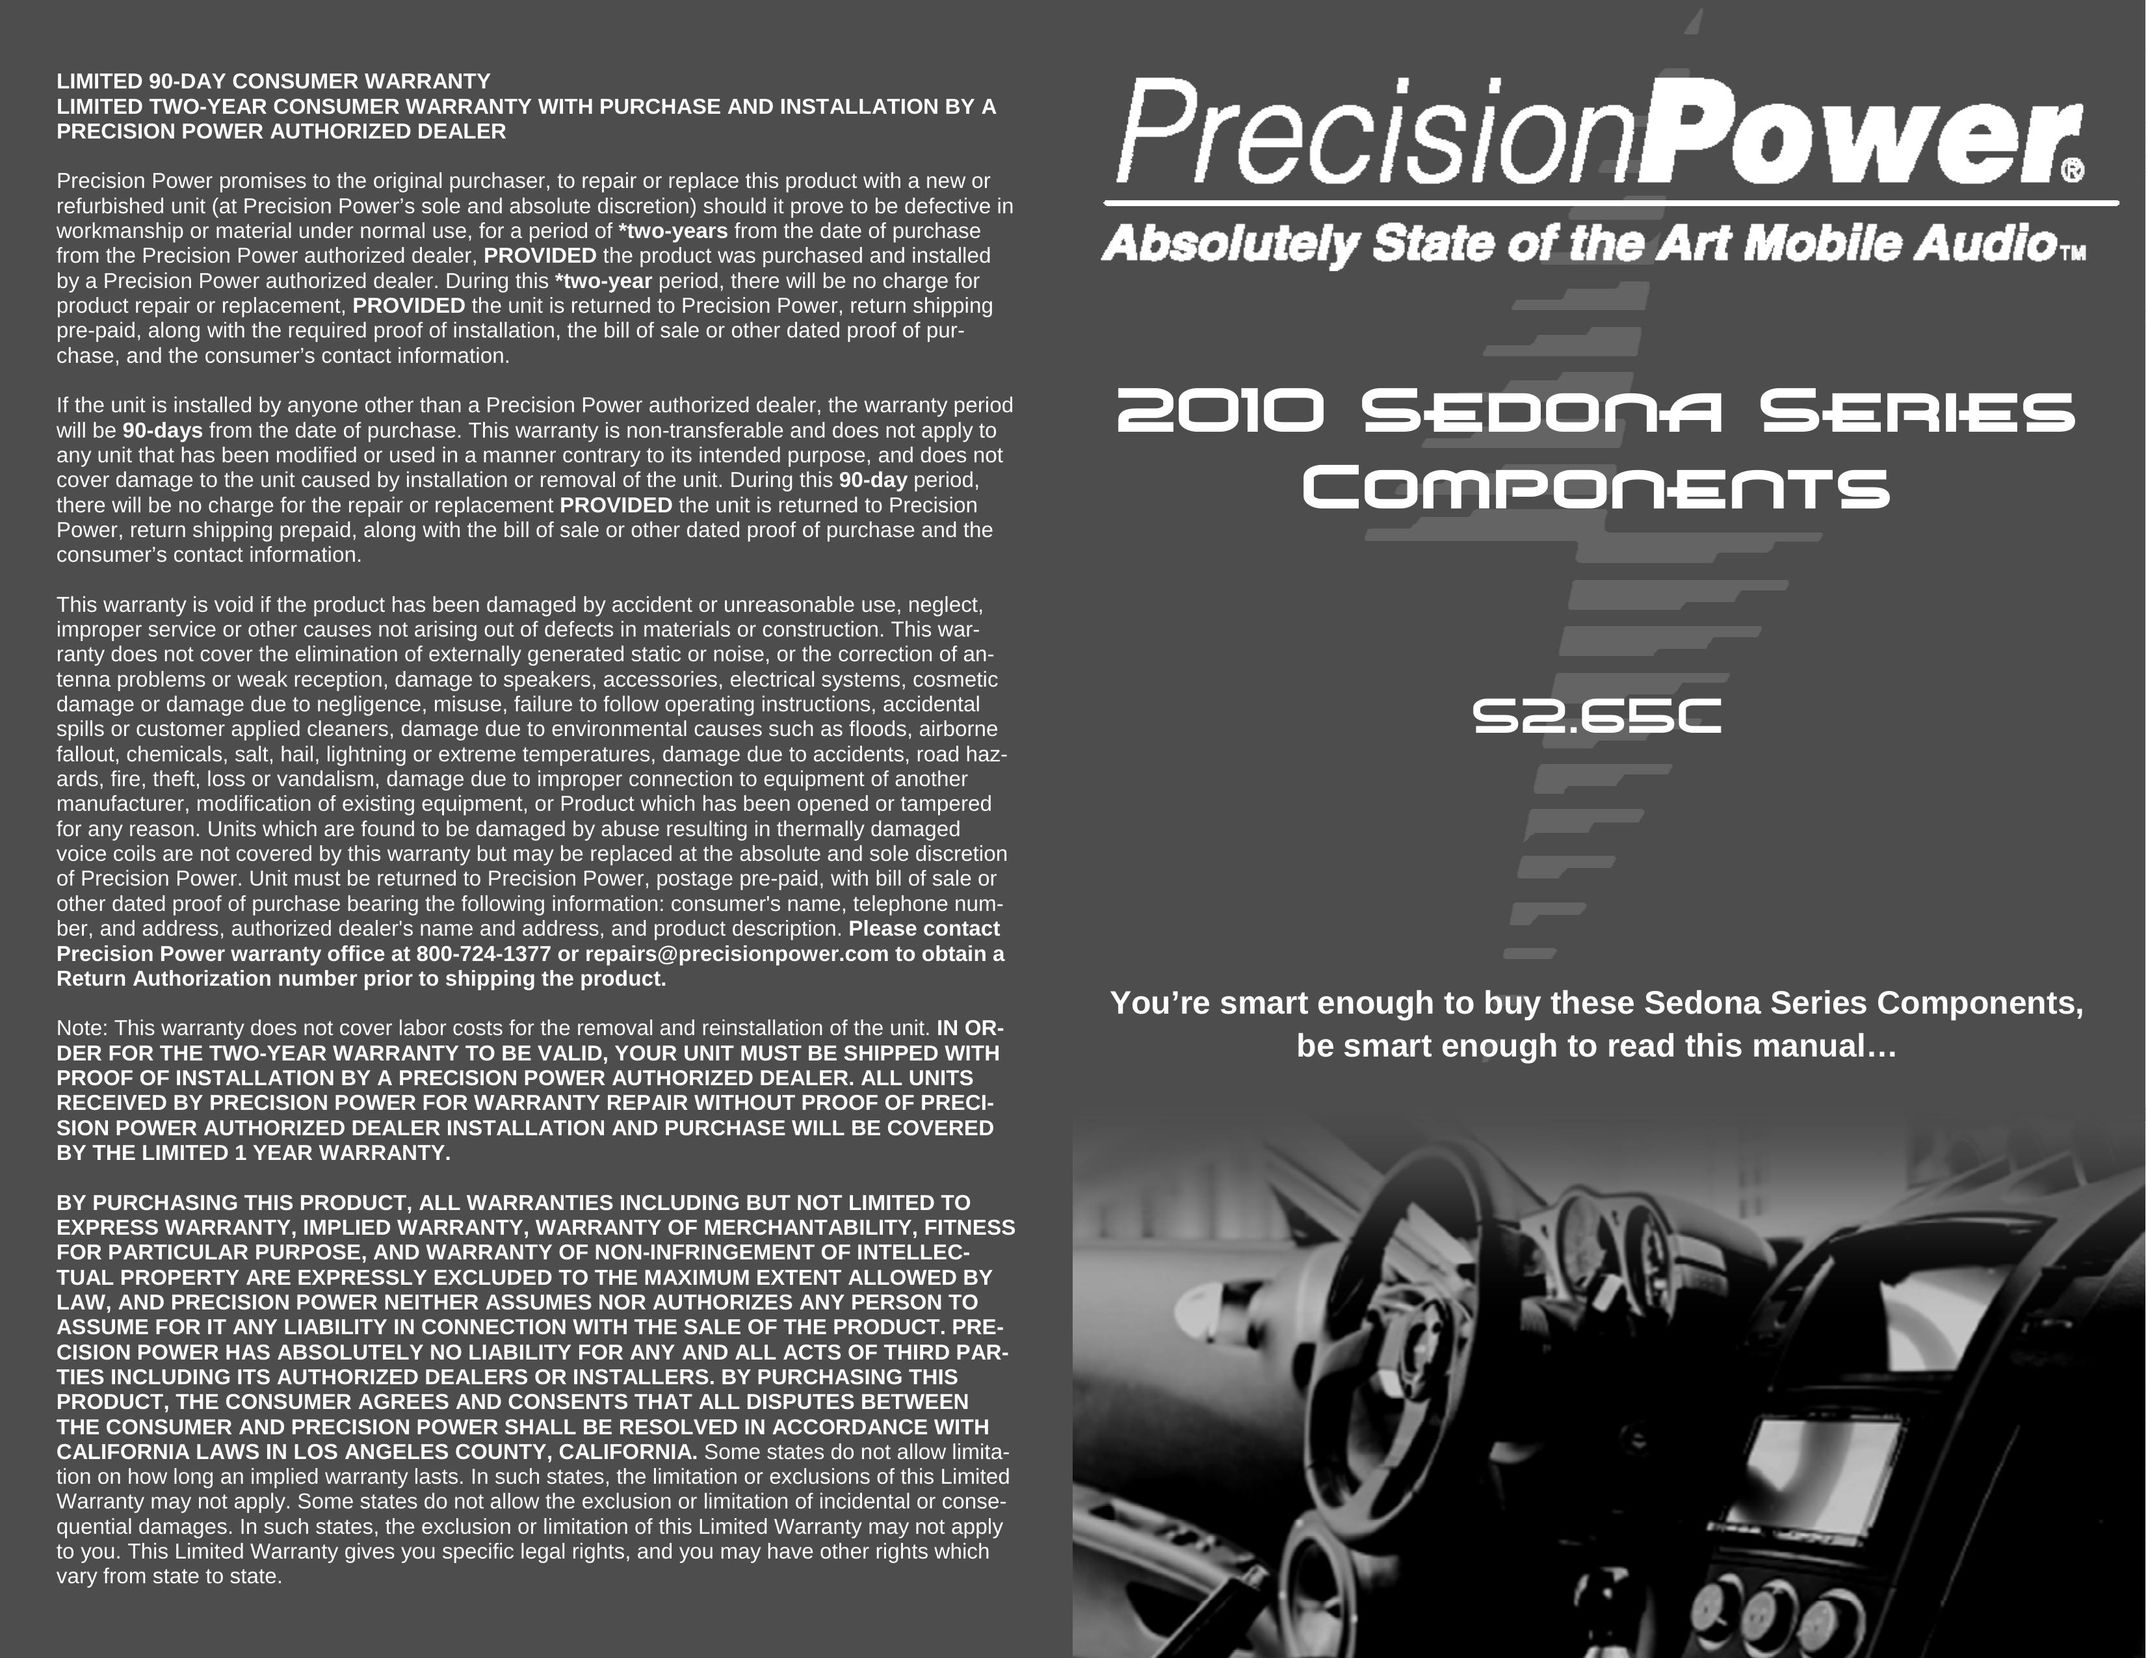 Precision Power S2.65C Car Speaker User Manual